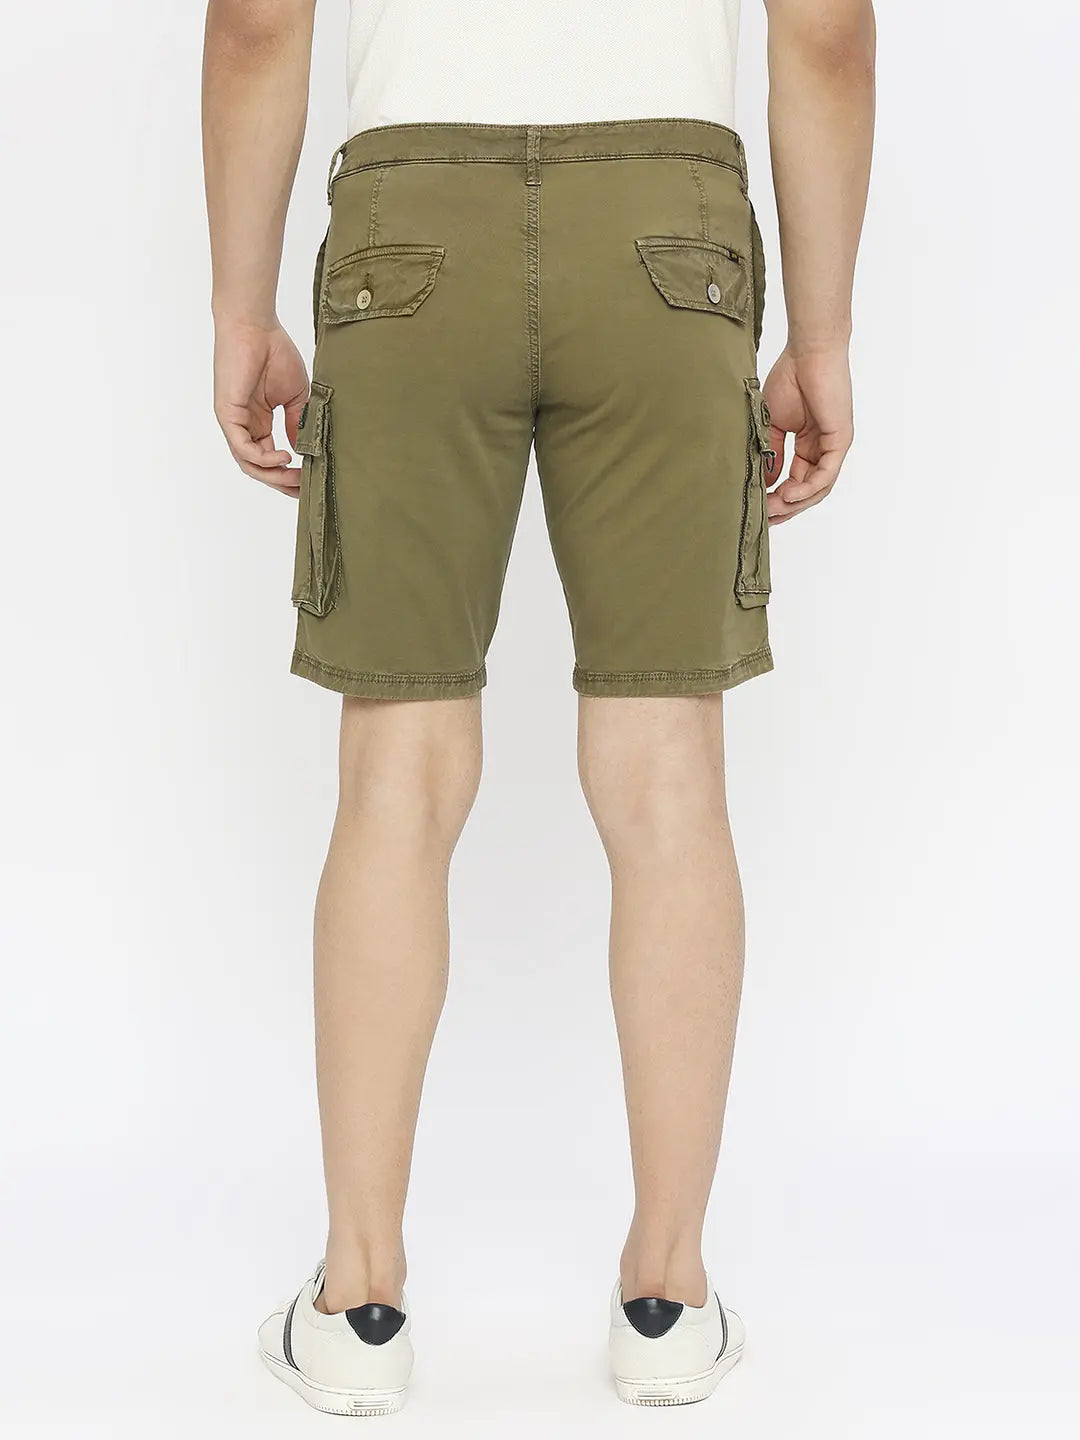 Spykar Men Olive Green Cotton Slim Fit Knee Length Denim Shorts